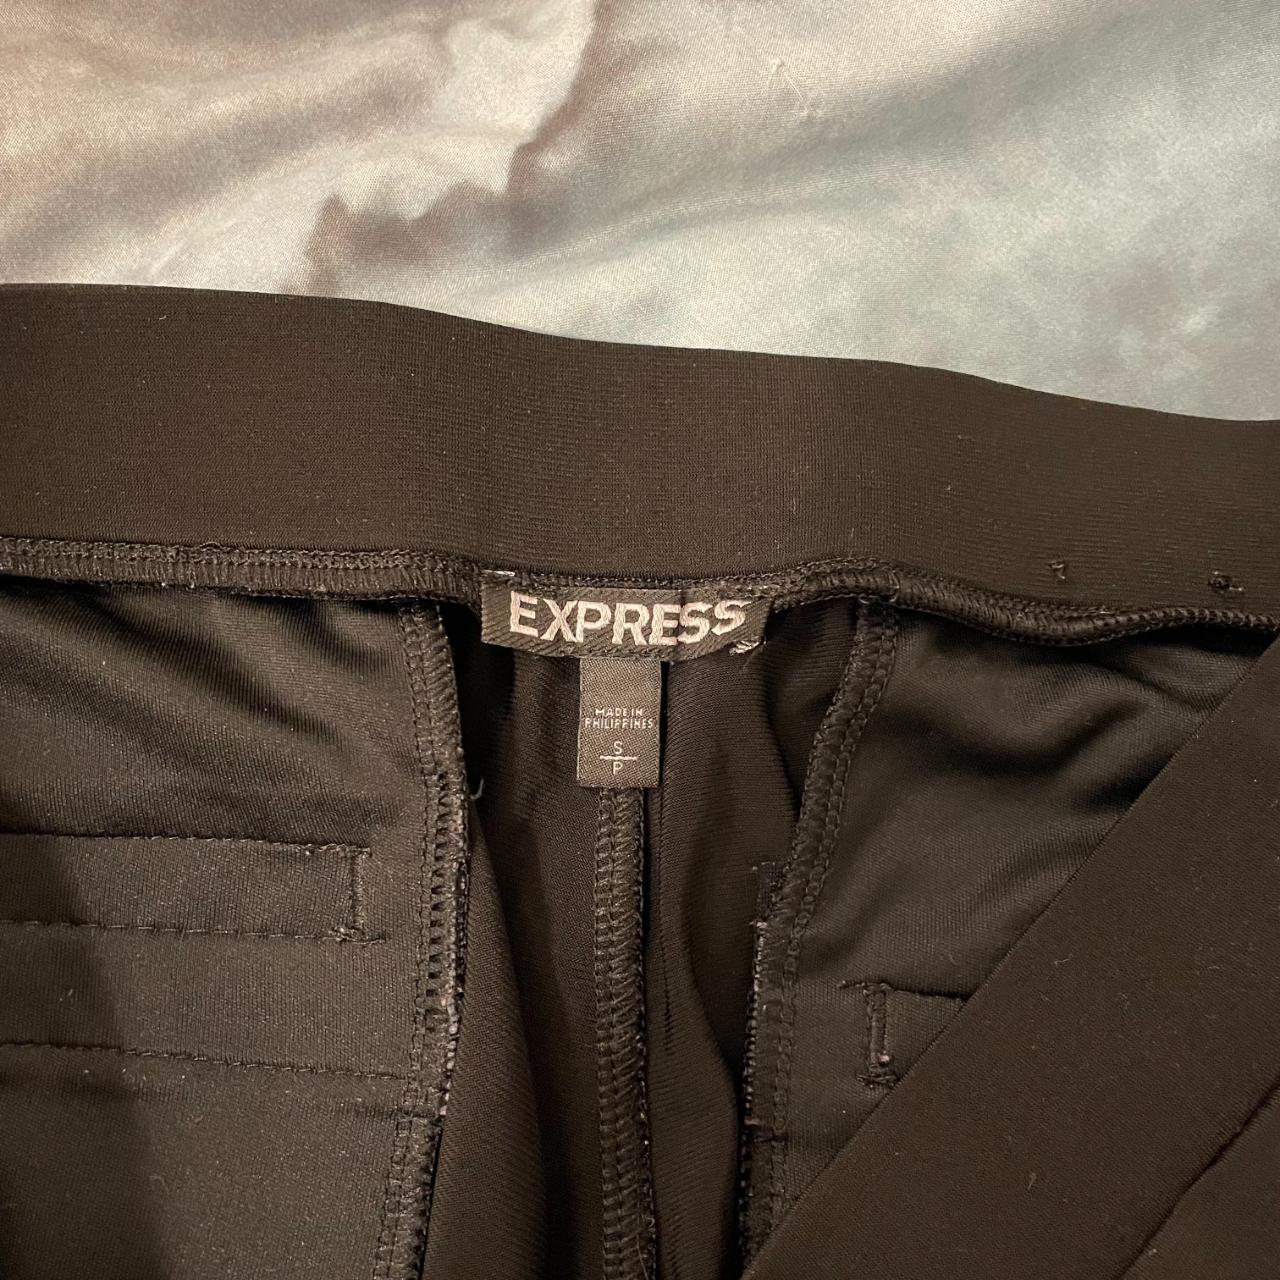 Product Image 2 - Express women's dress pants/trousers, size